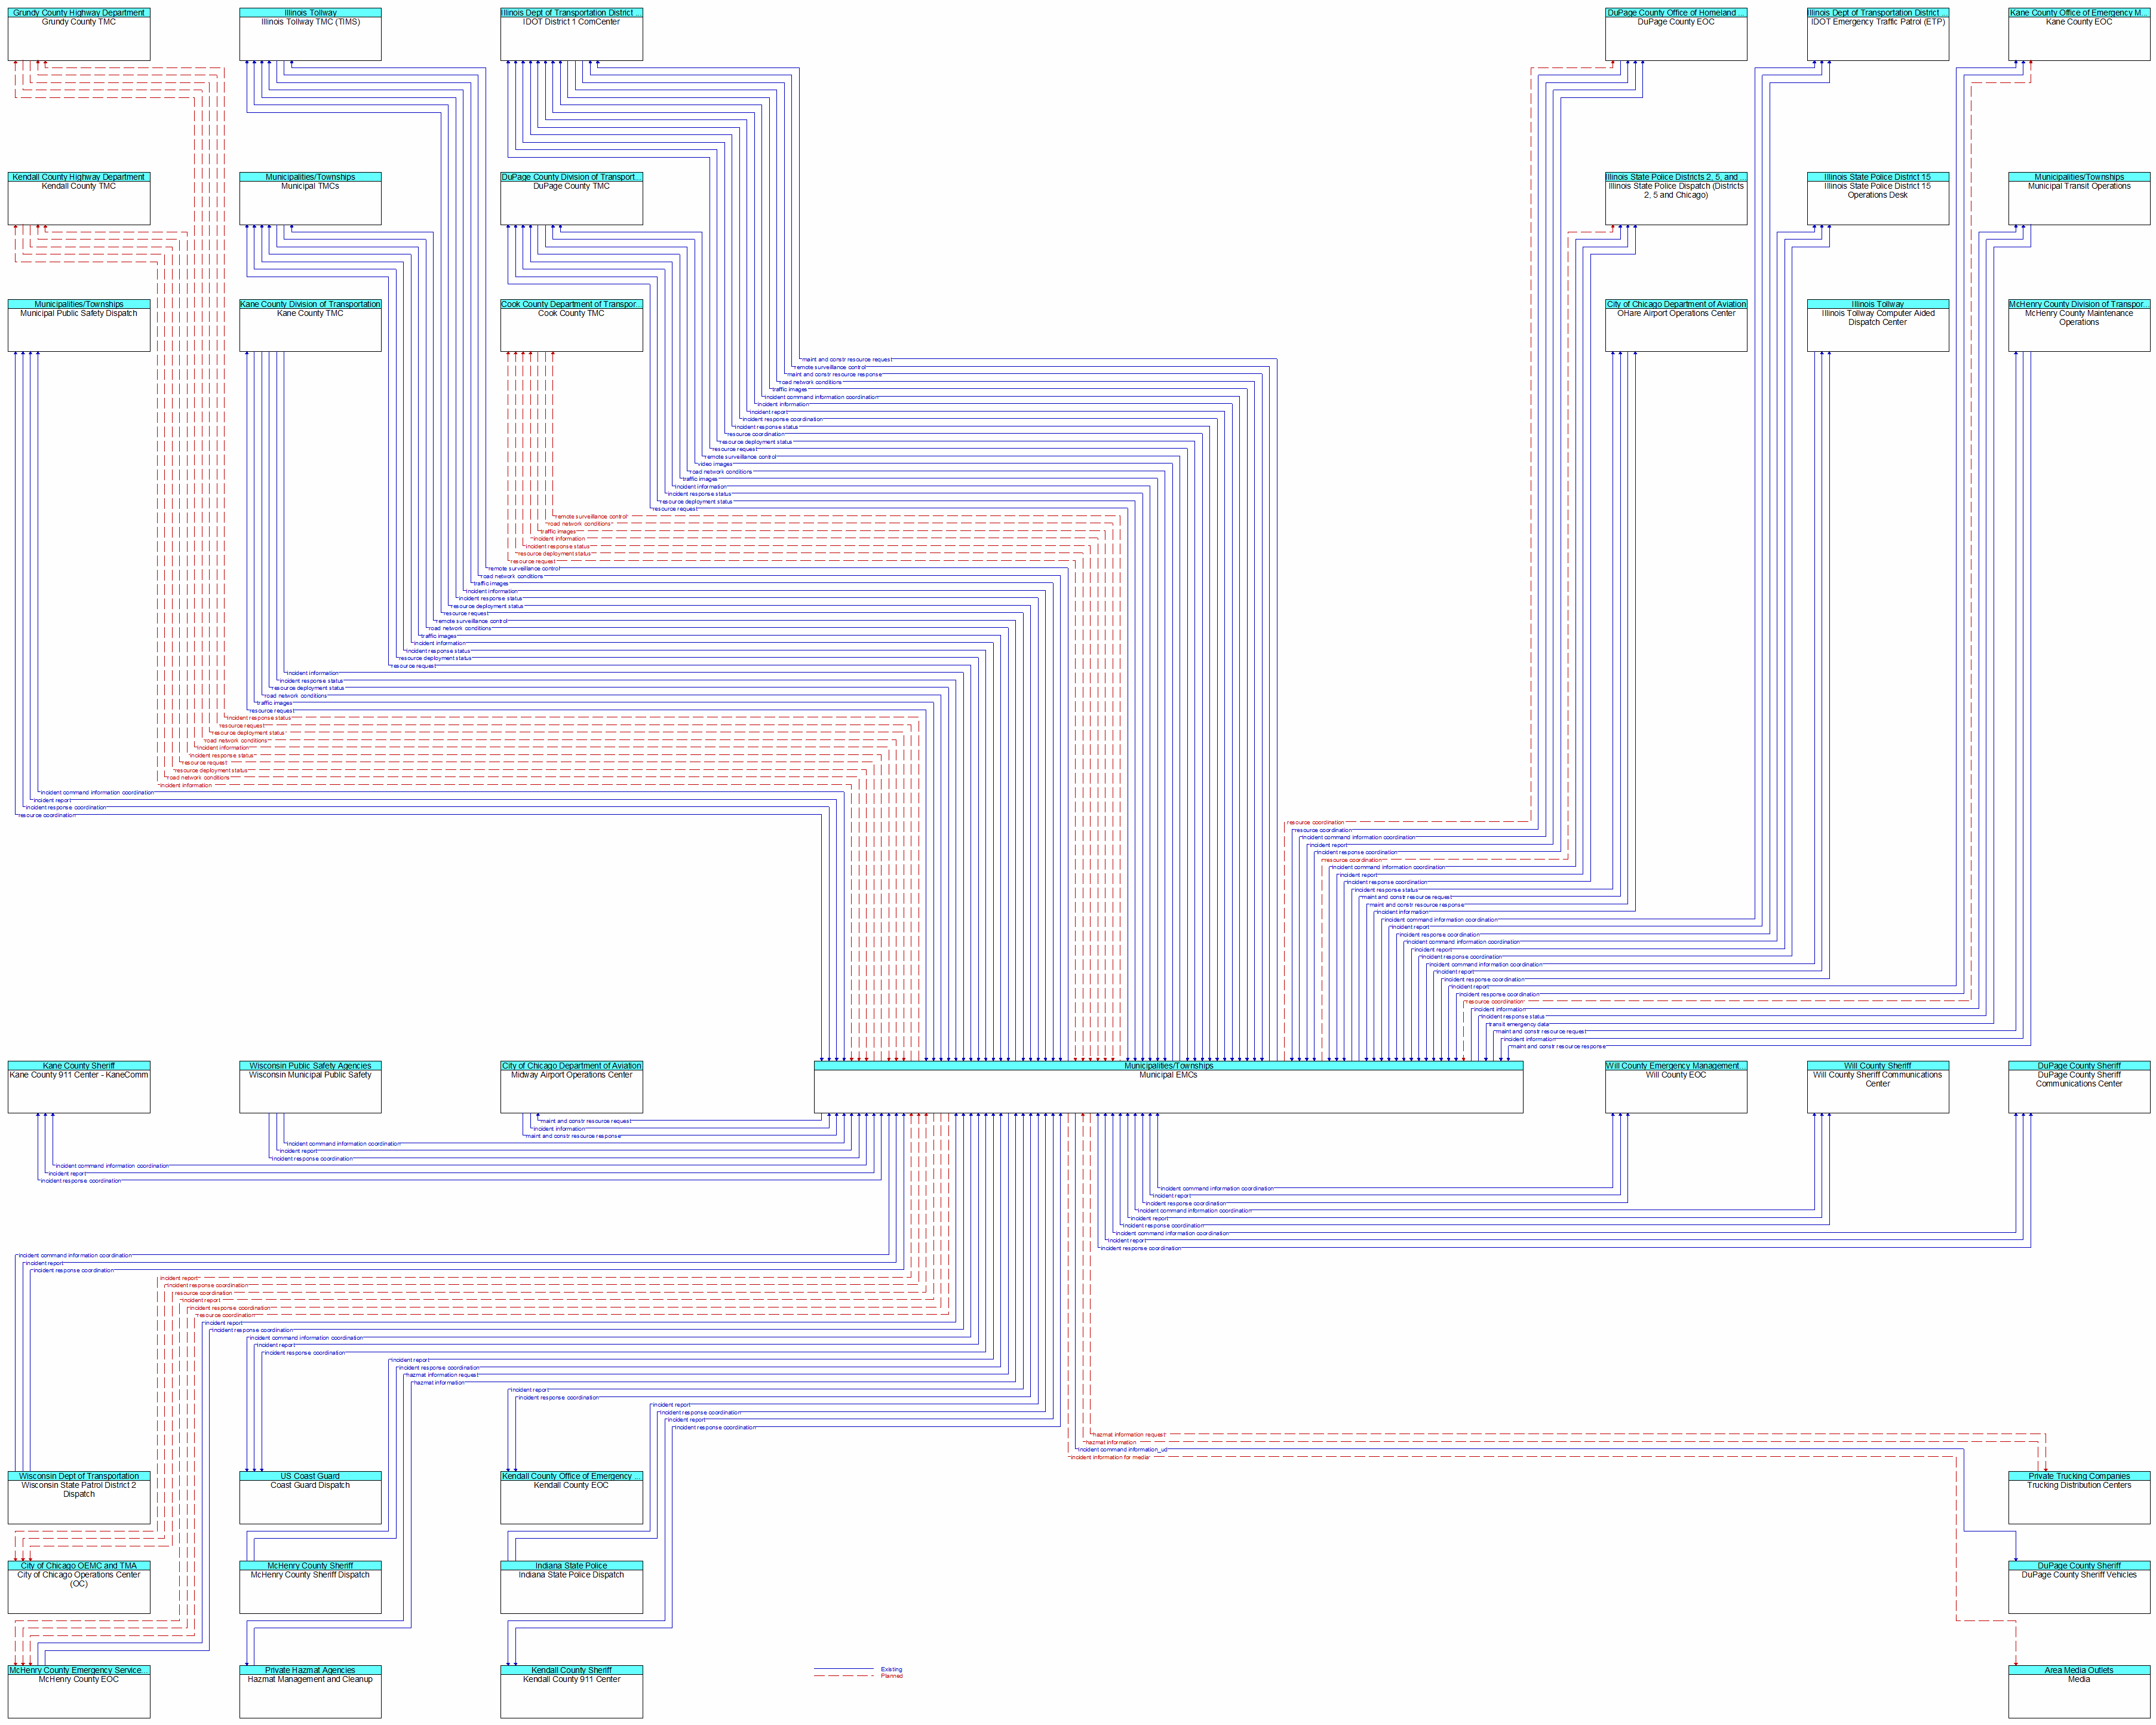 Context Diagram - Municipal EMCs